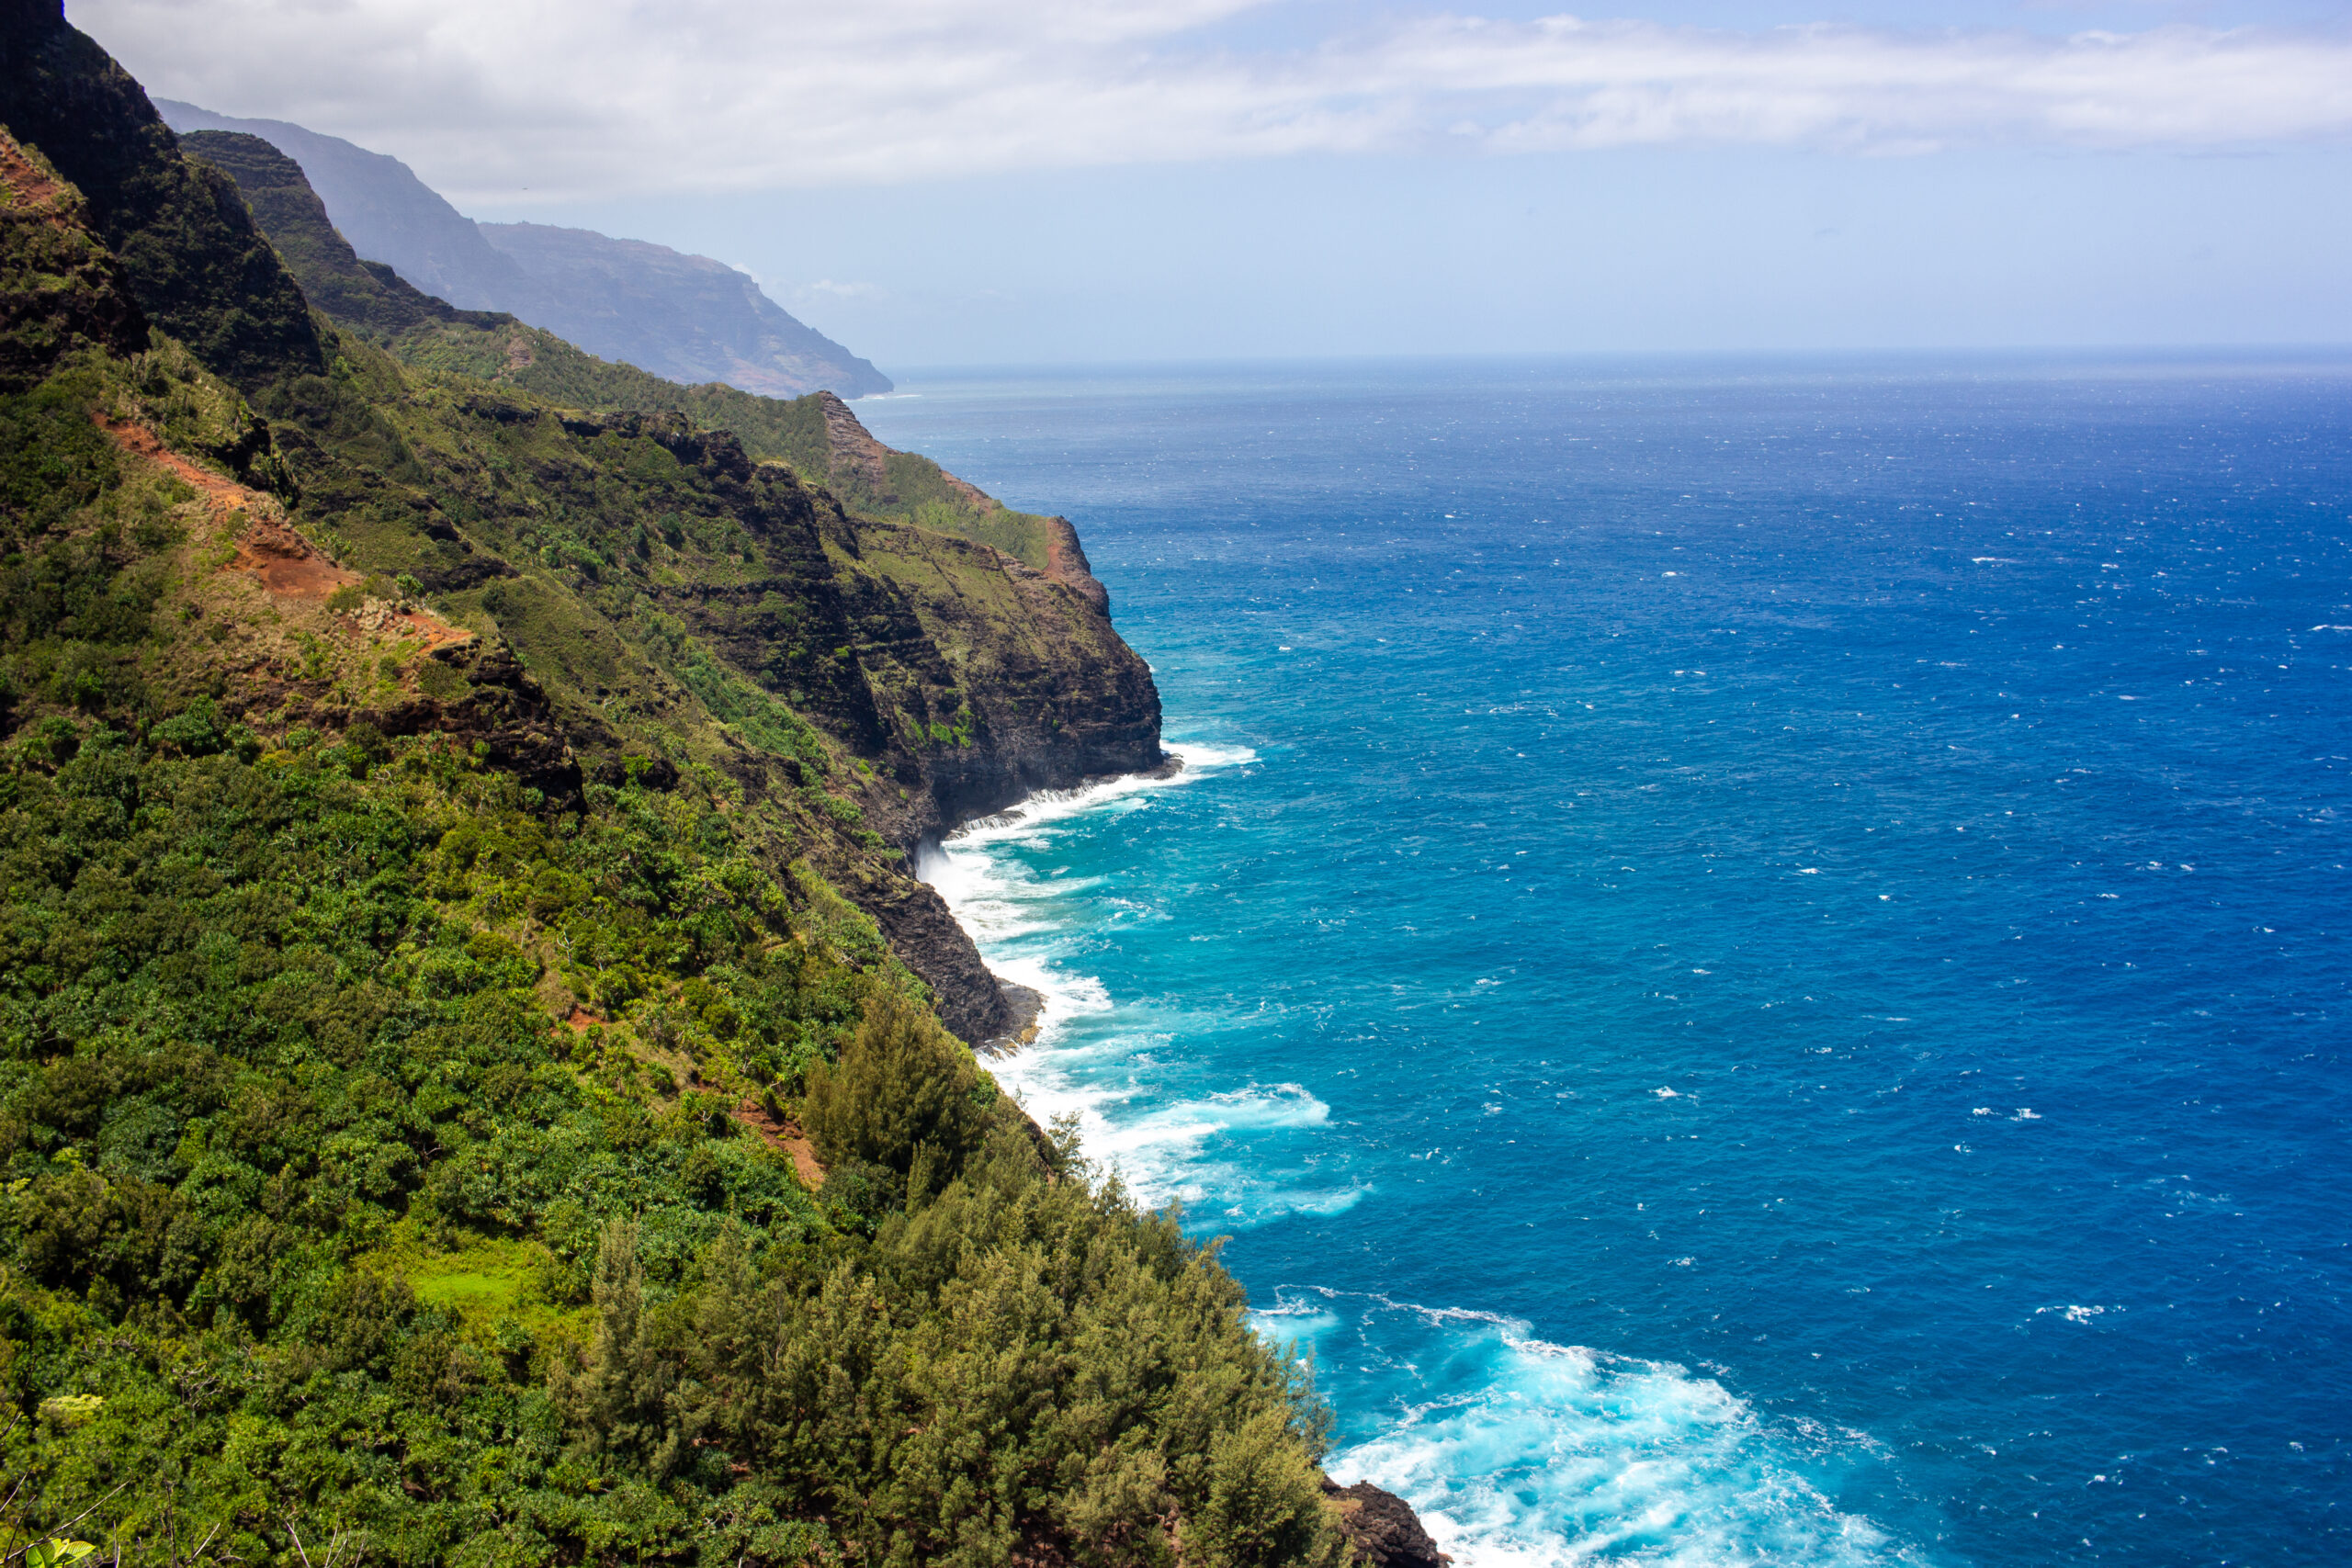 Views backpacking Kauai along the Napali Coast